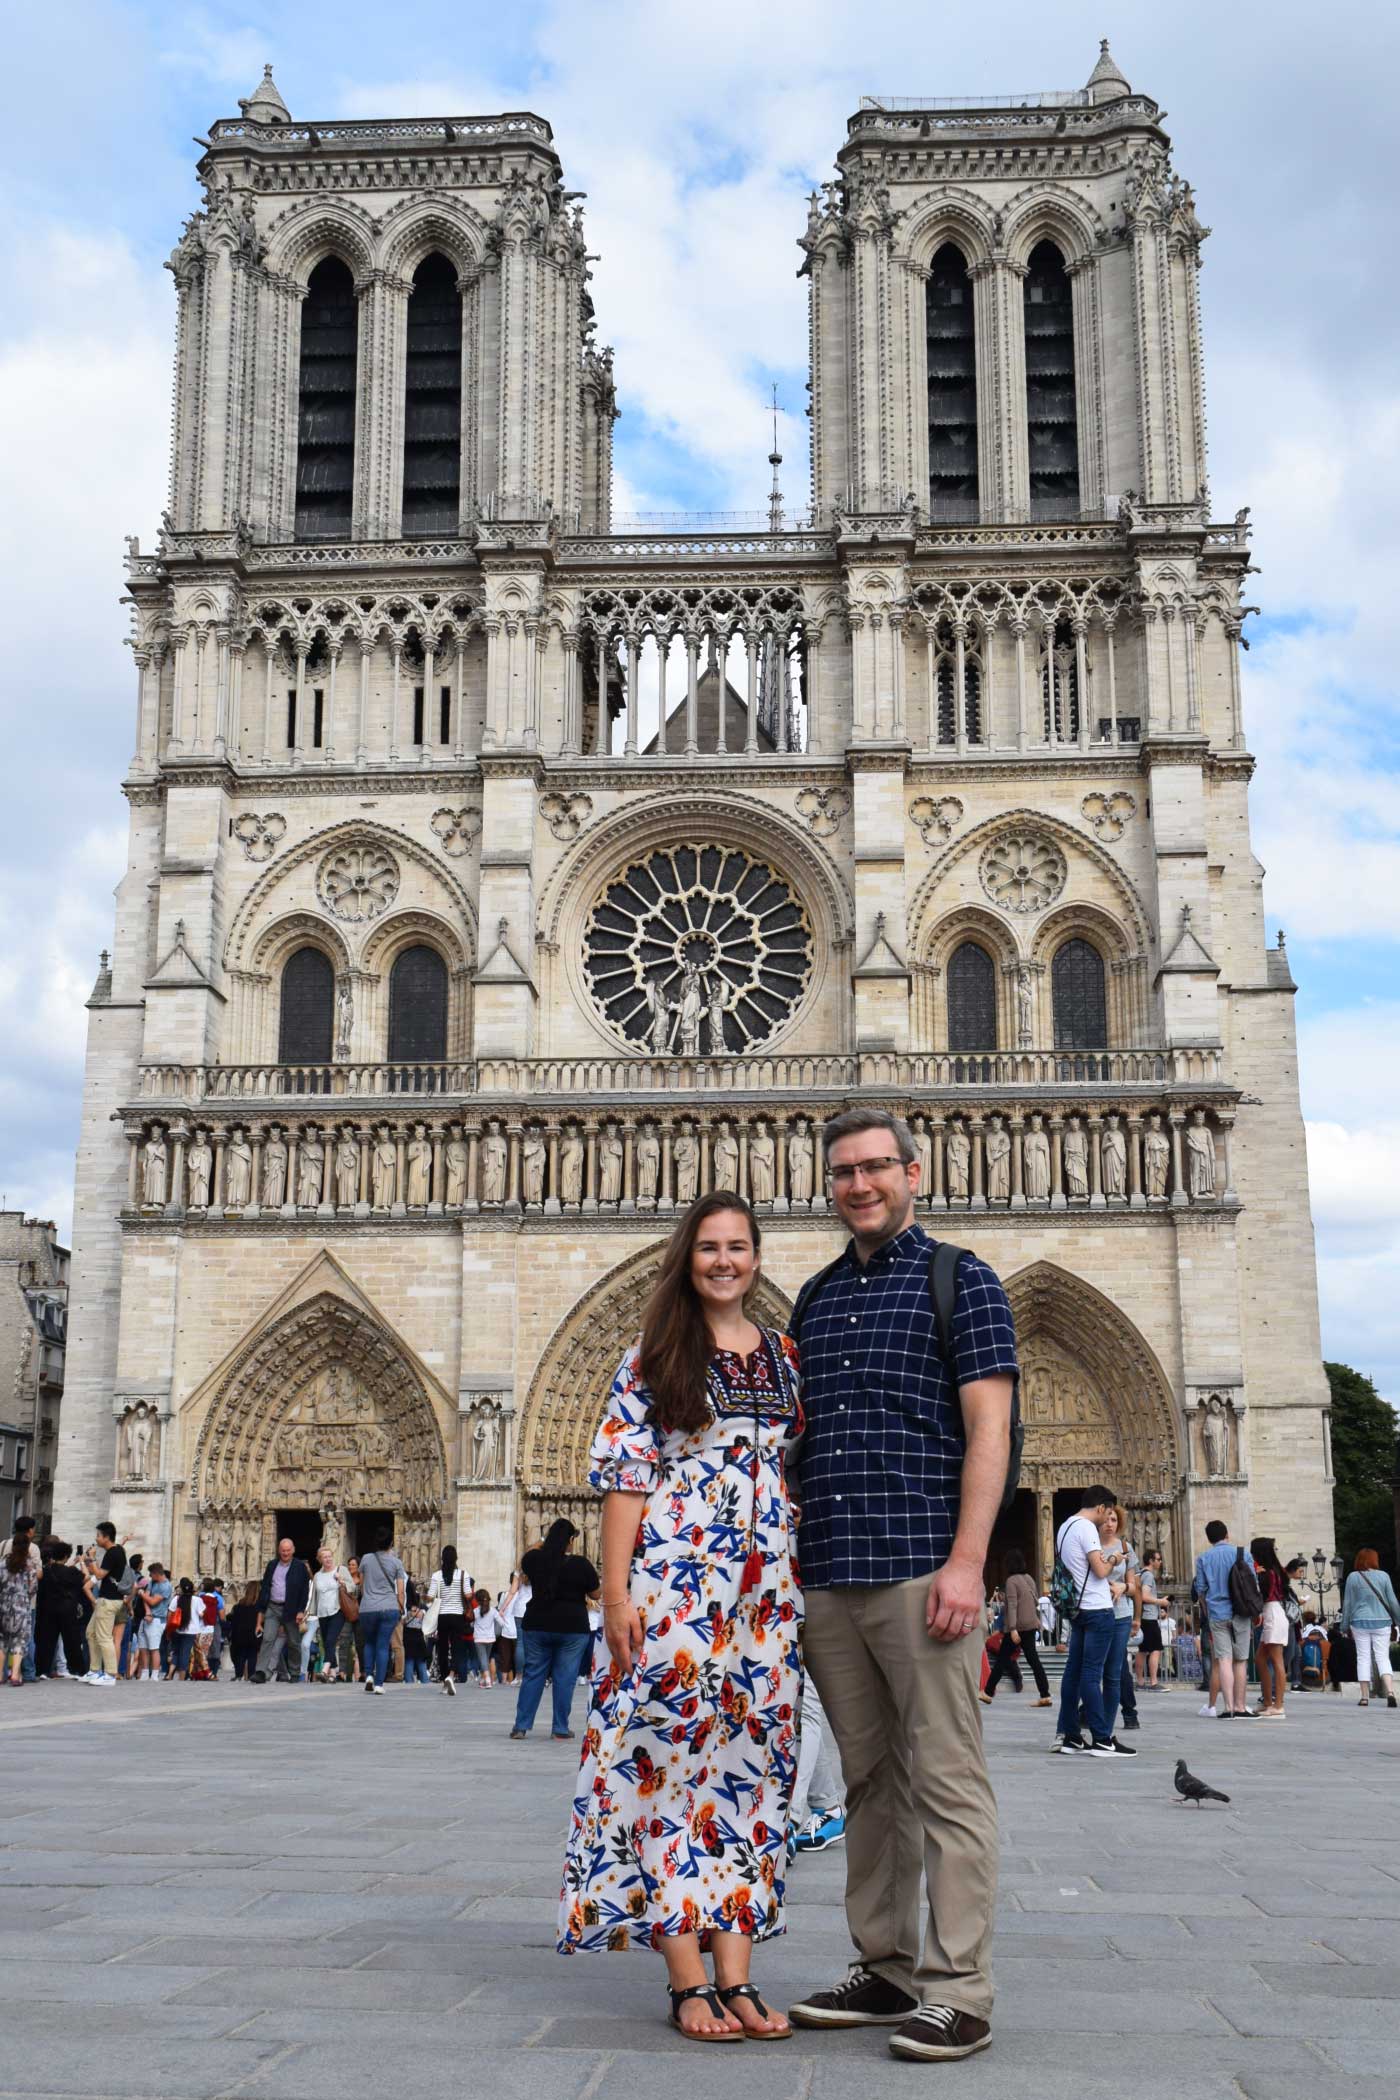 Notre Dame Paris pre-fire in 2019